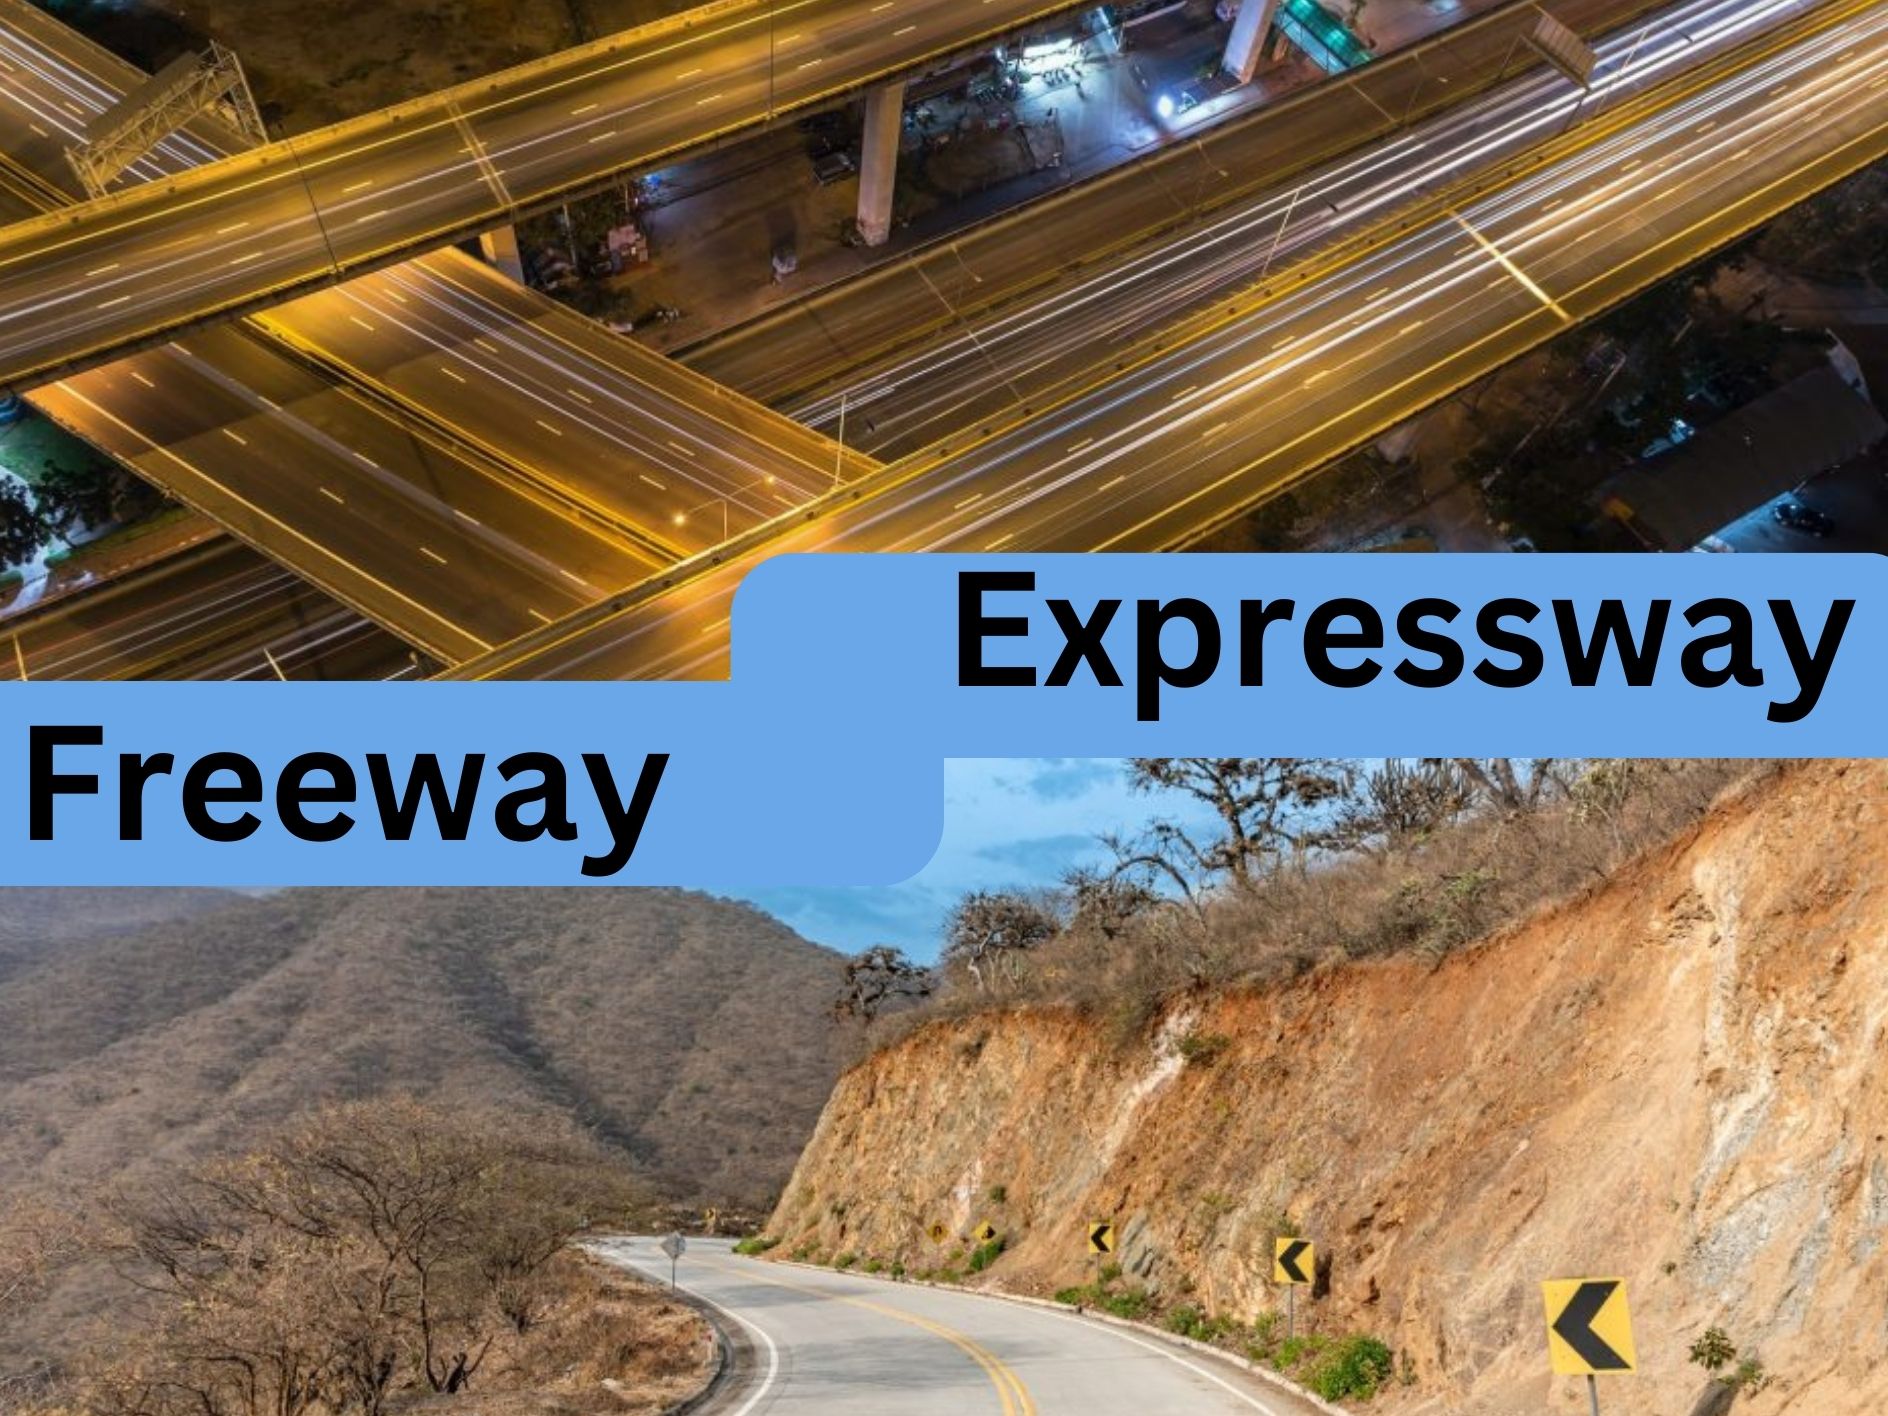 Expressways vs. Freeways